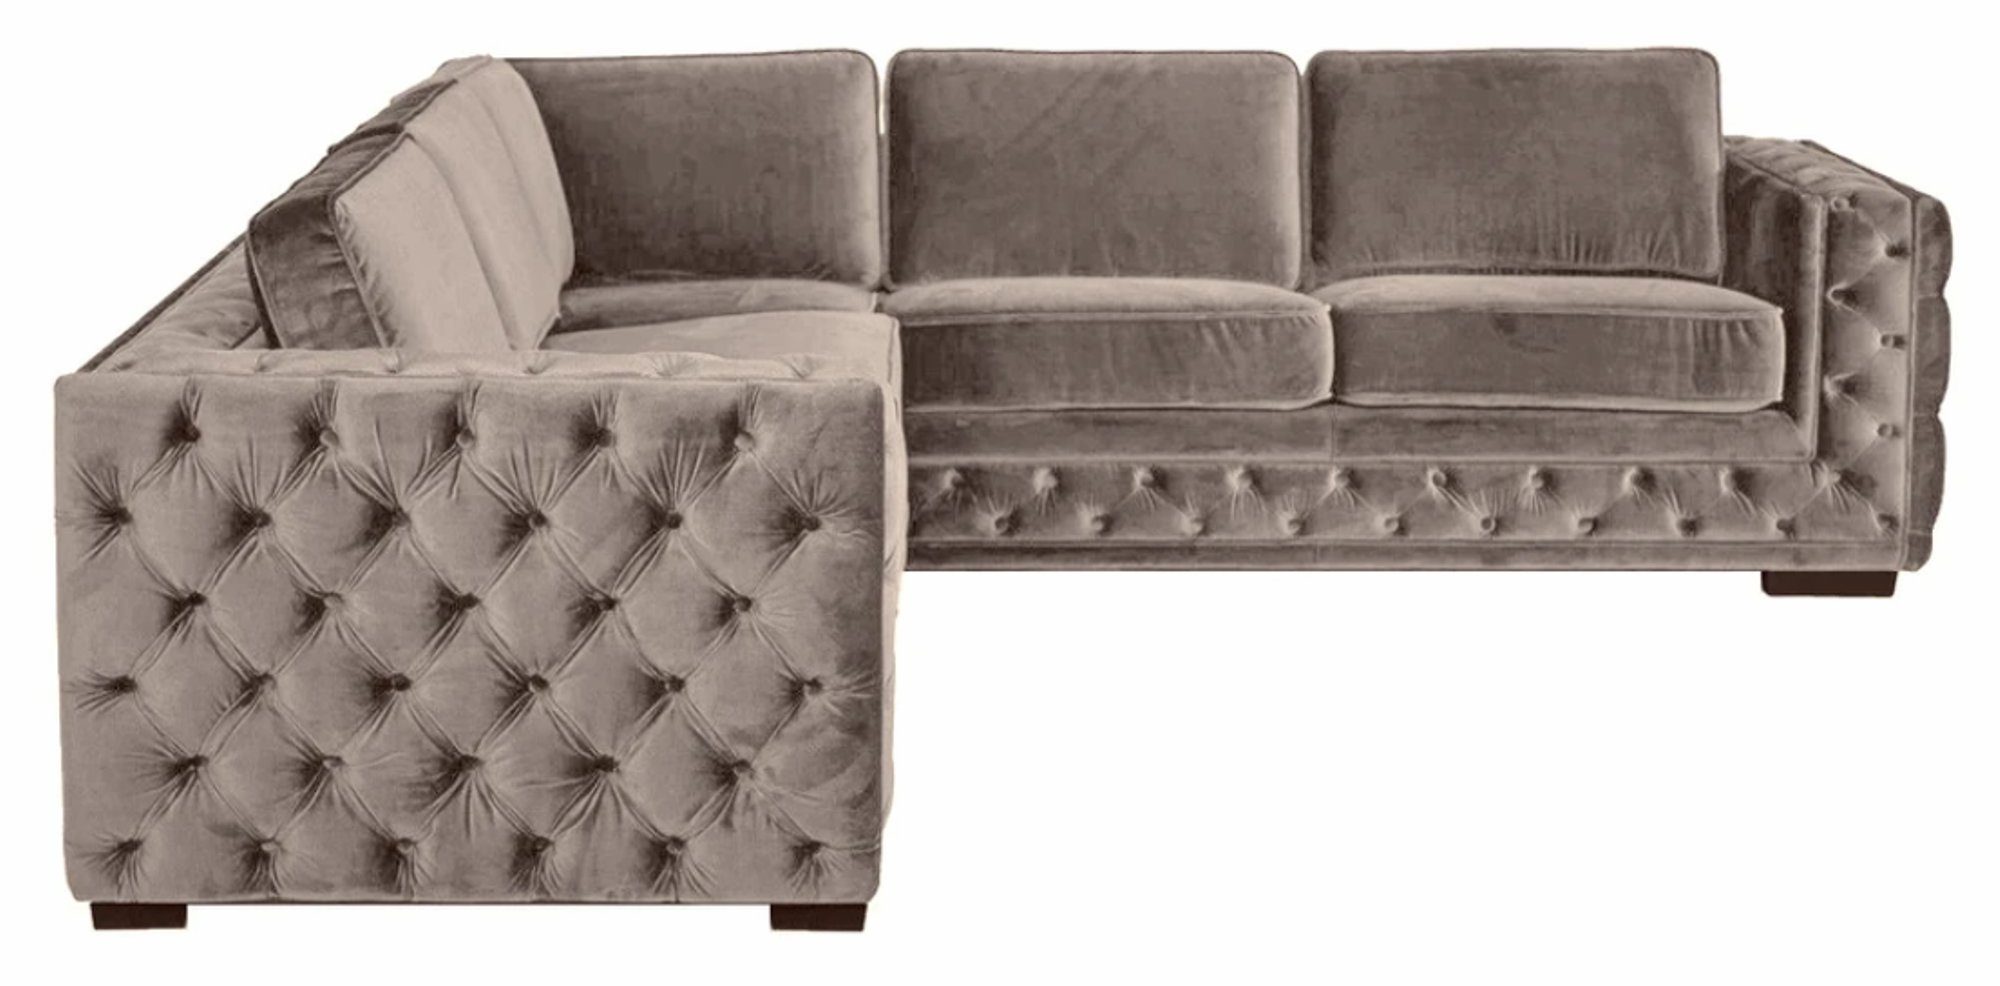 JVmoebel Ecksofa Chesterfield L-Form Sofa beige luxus Design, Made in Europe